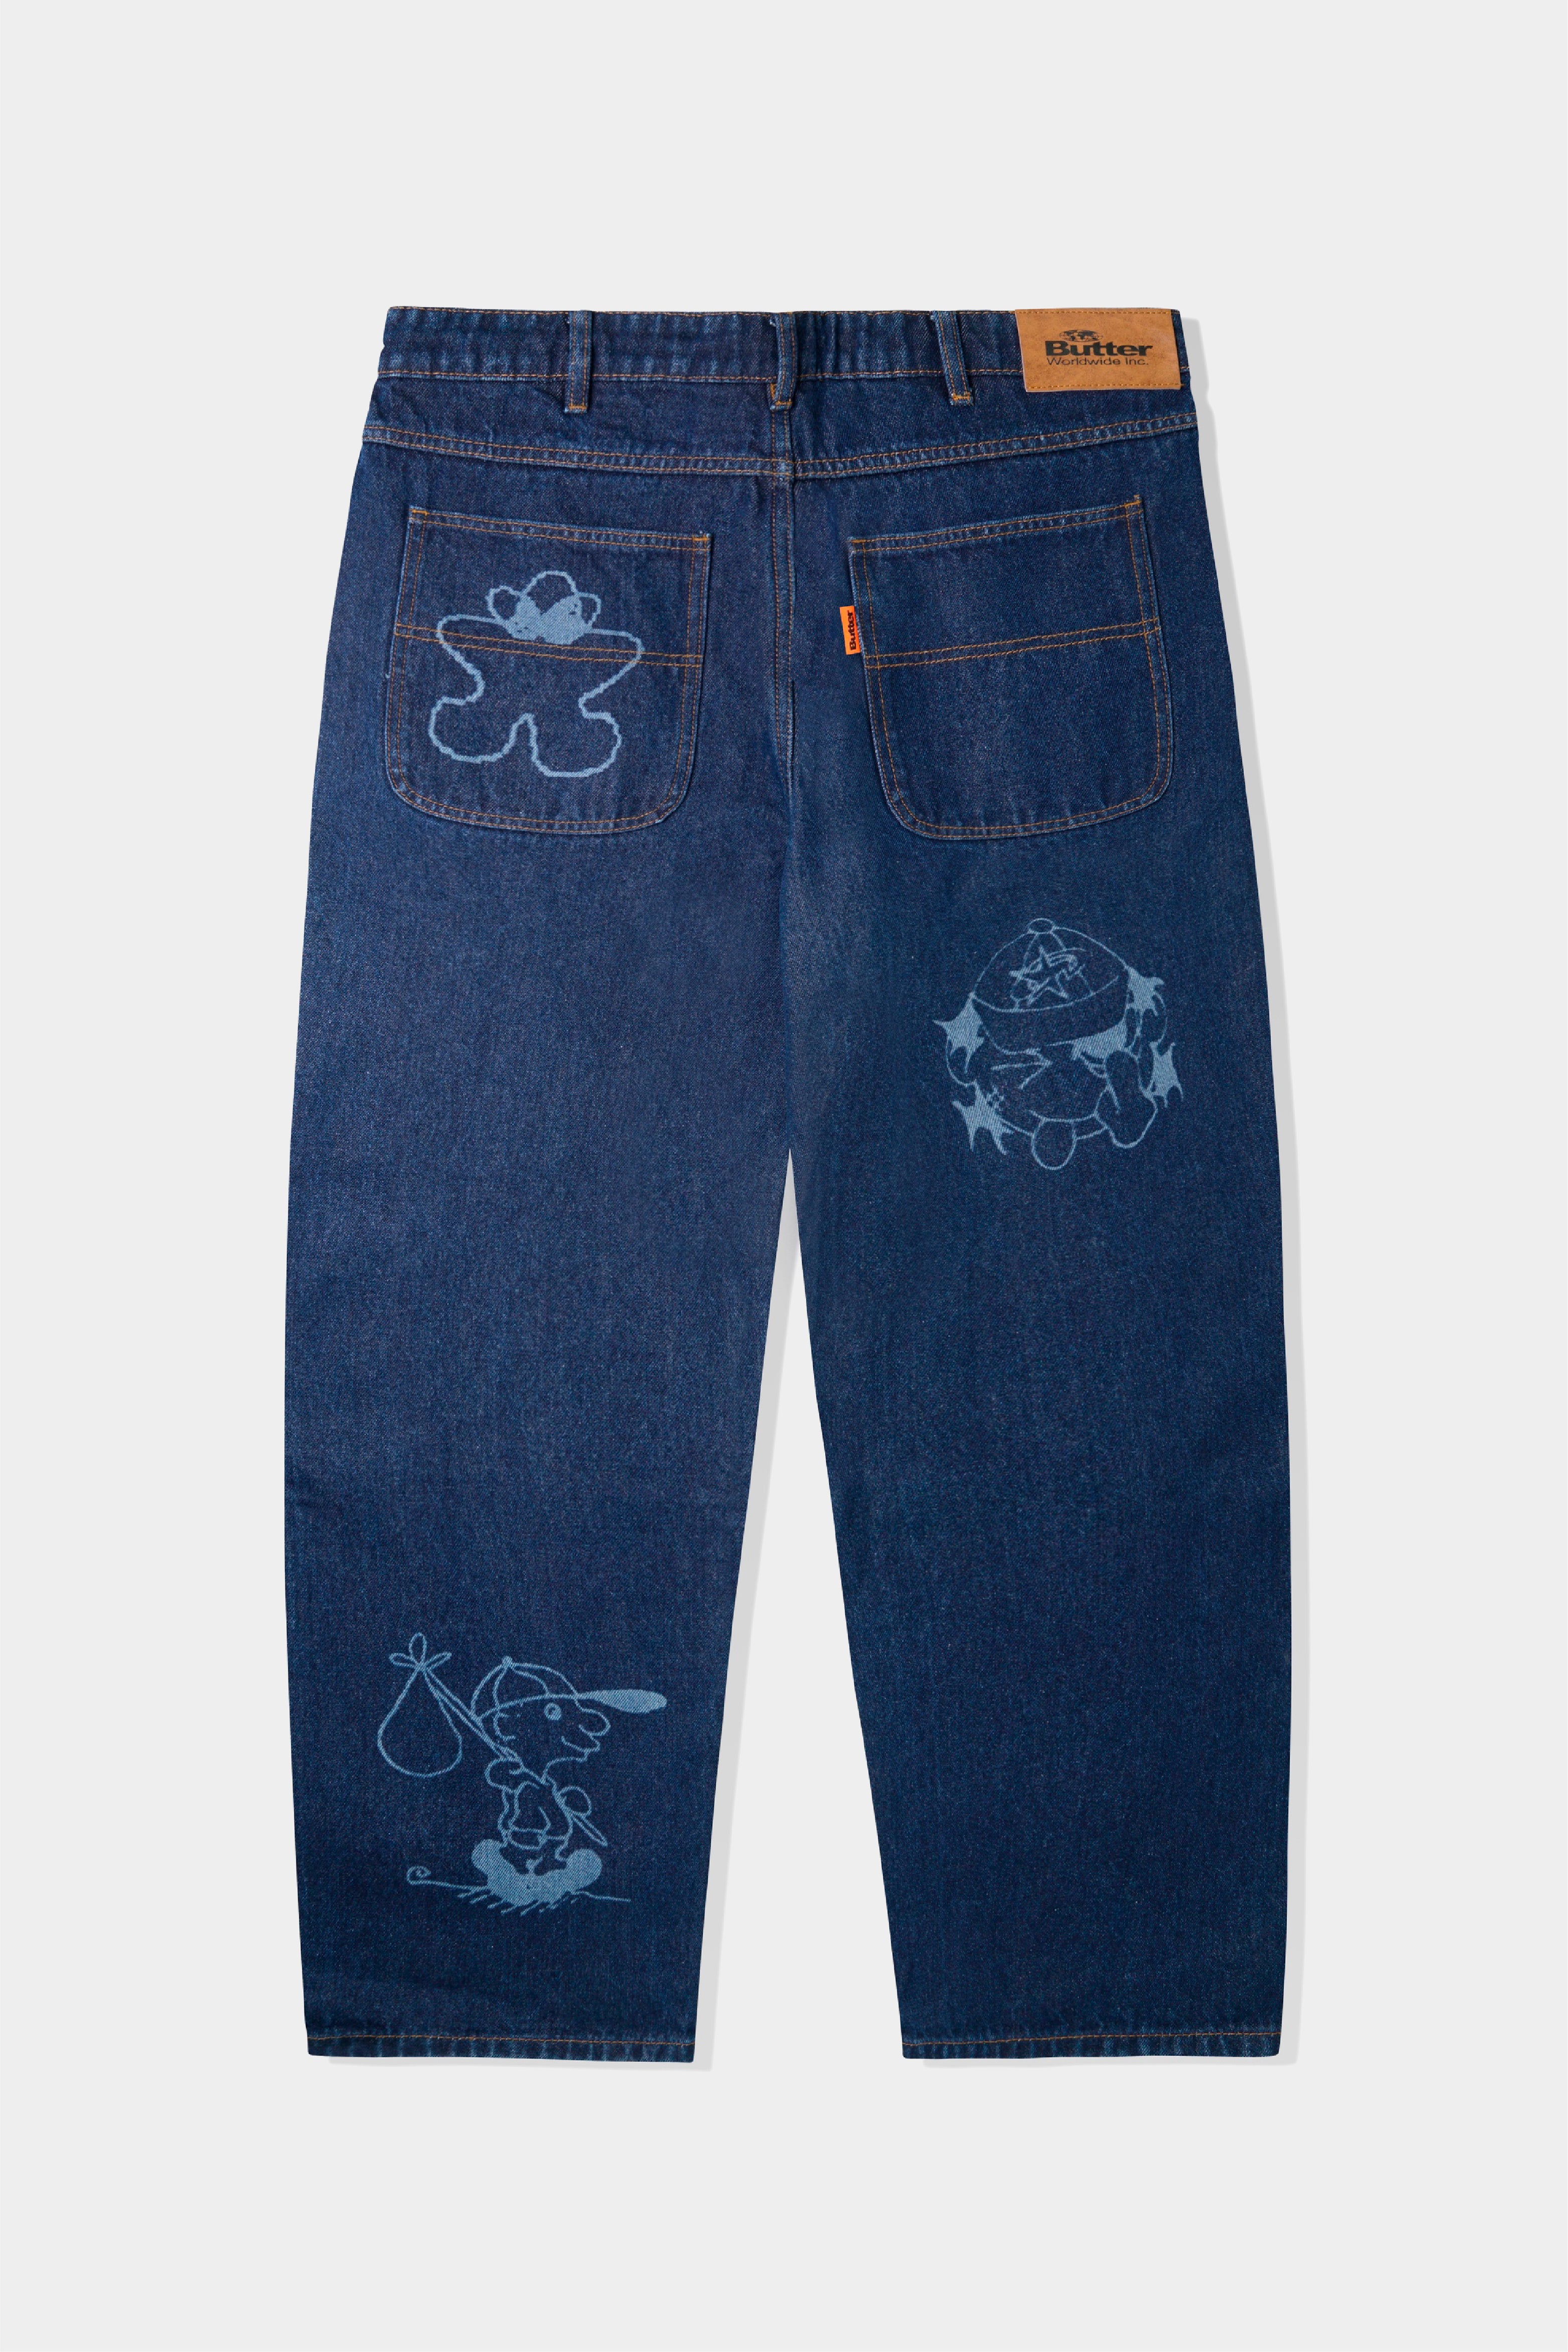 Selectshop FRAME - BUTTER GOODS Jun Denim Jeans Bottoms Dubai